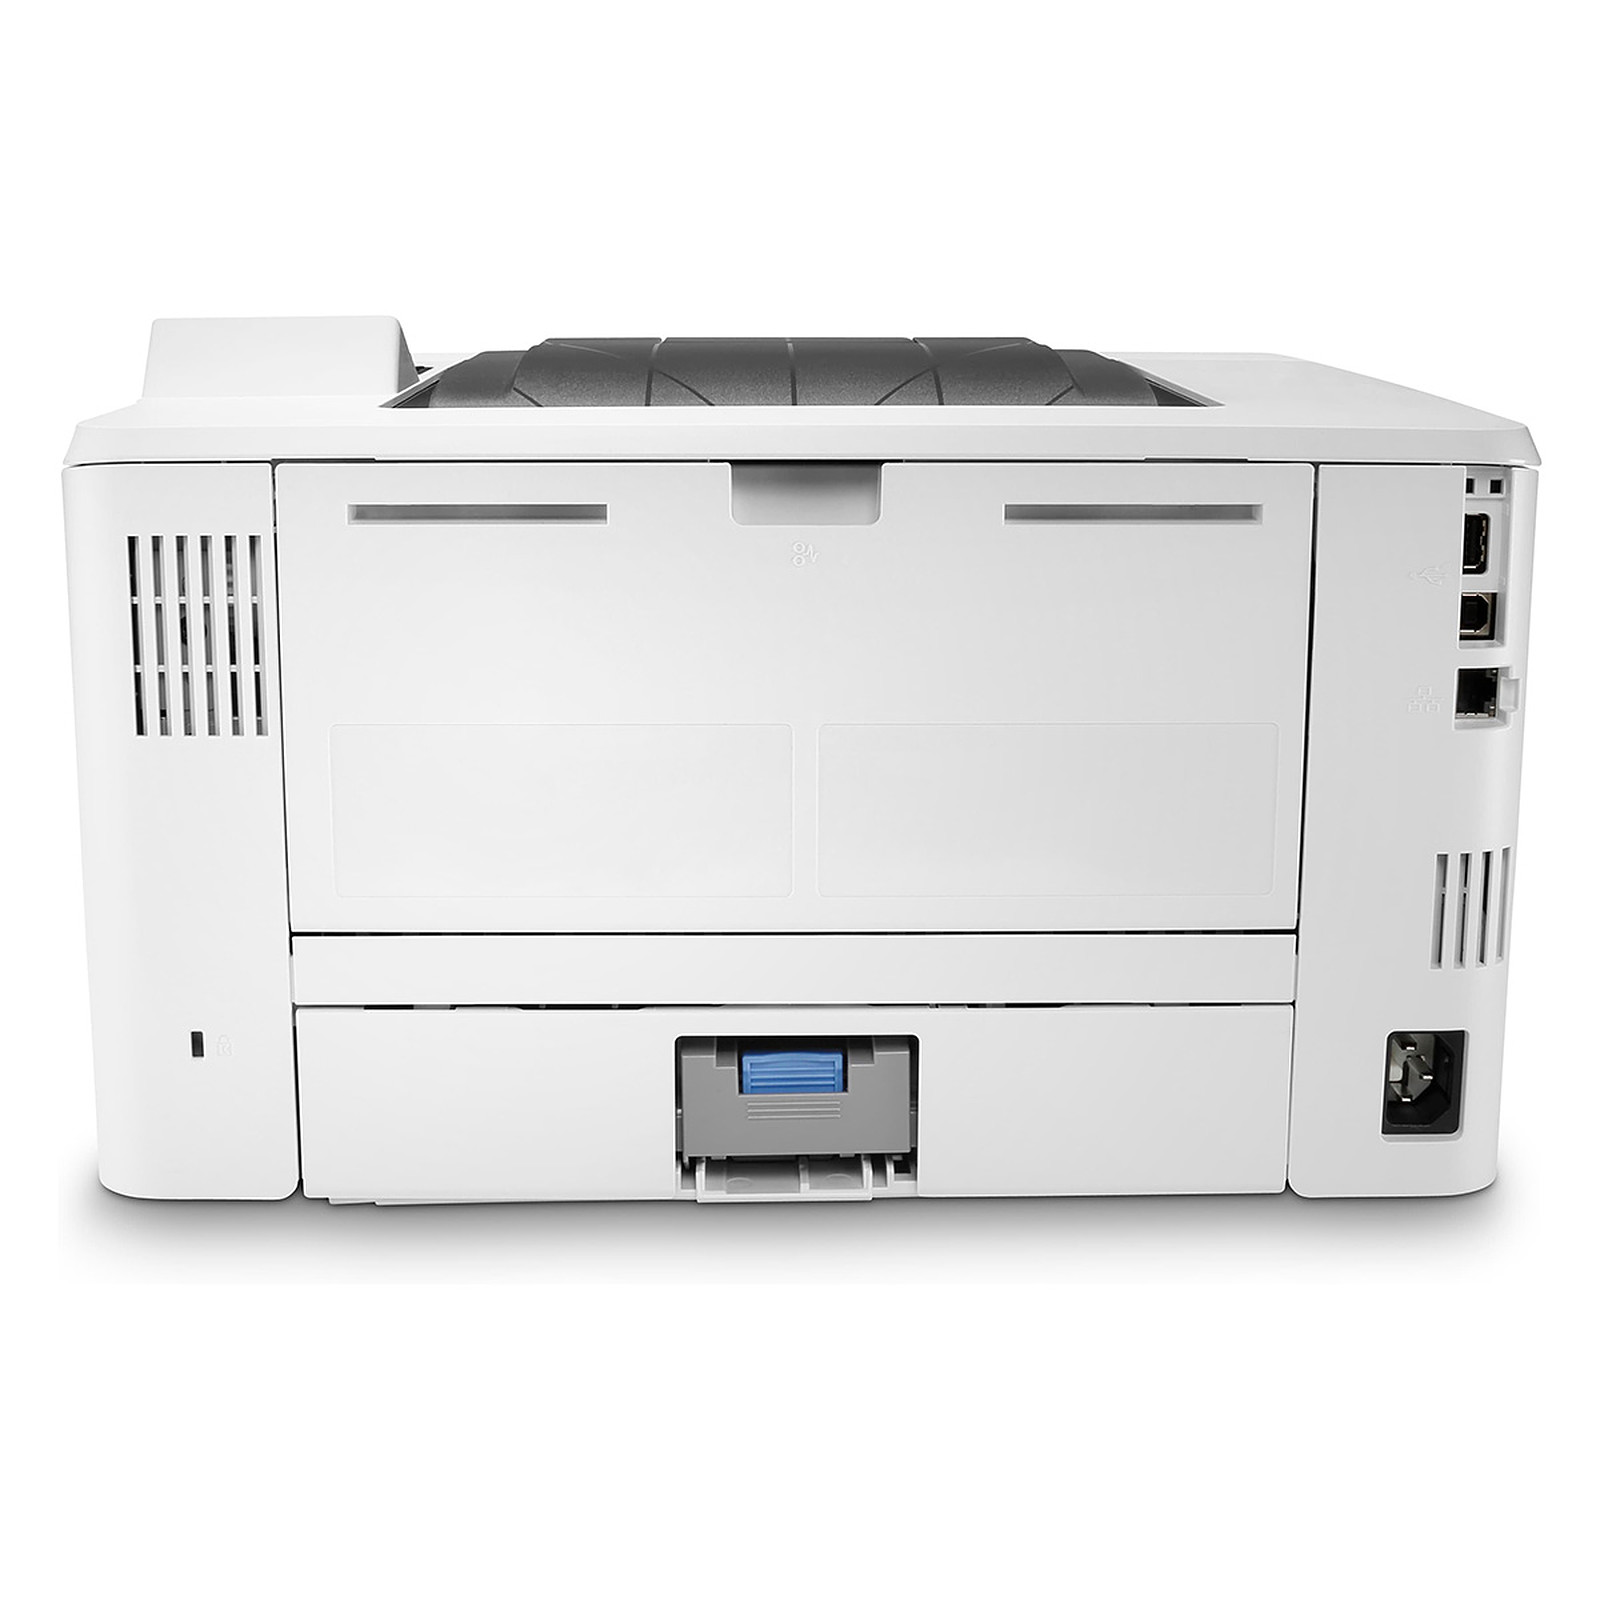 HP LaserJet Enterprise M406dn image